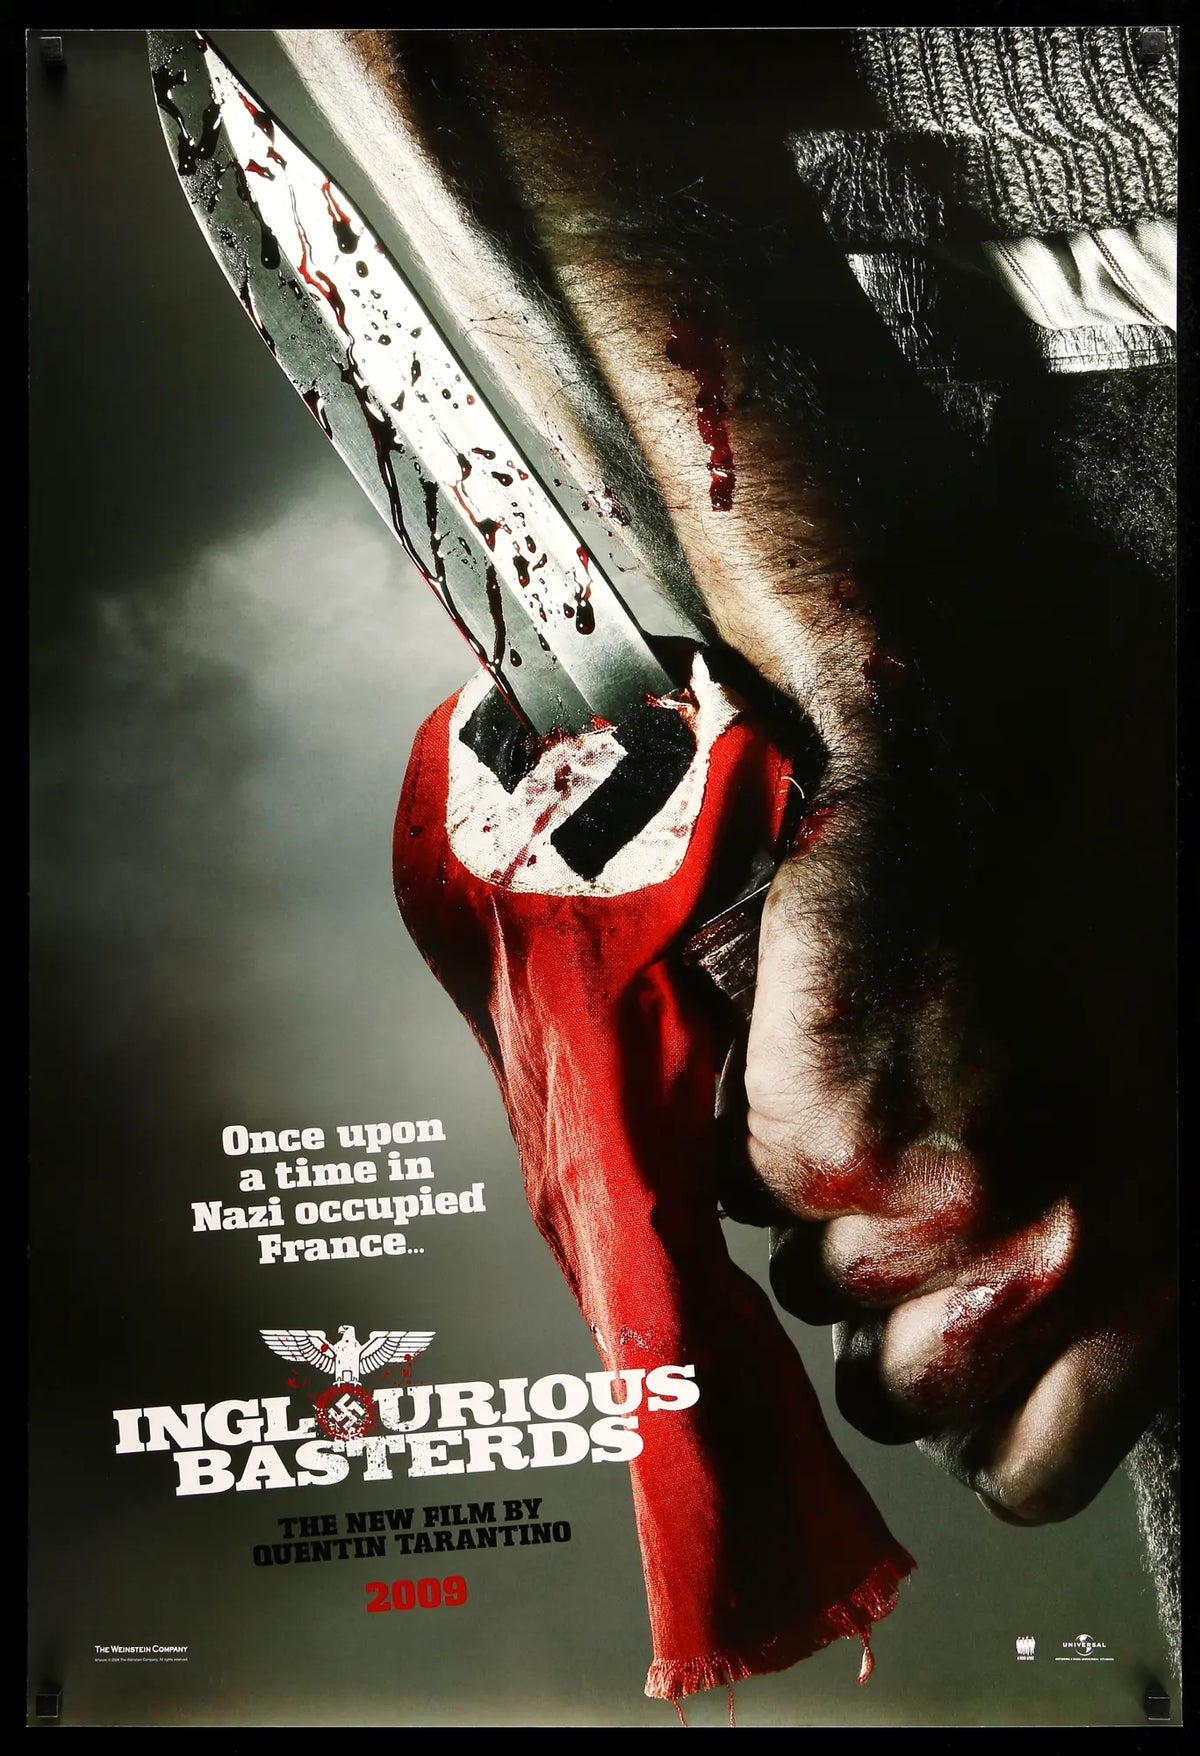 Inglourious Basterds (2009) original movie poster for sale at Original Film Art